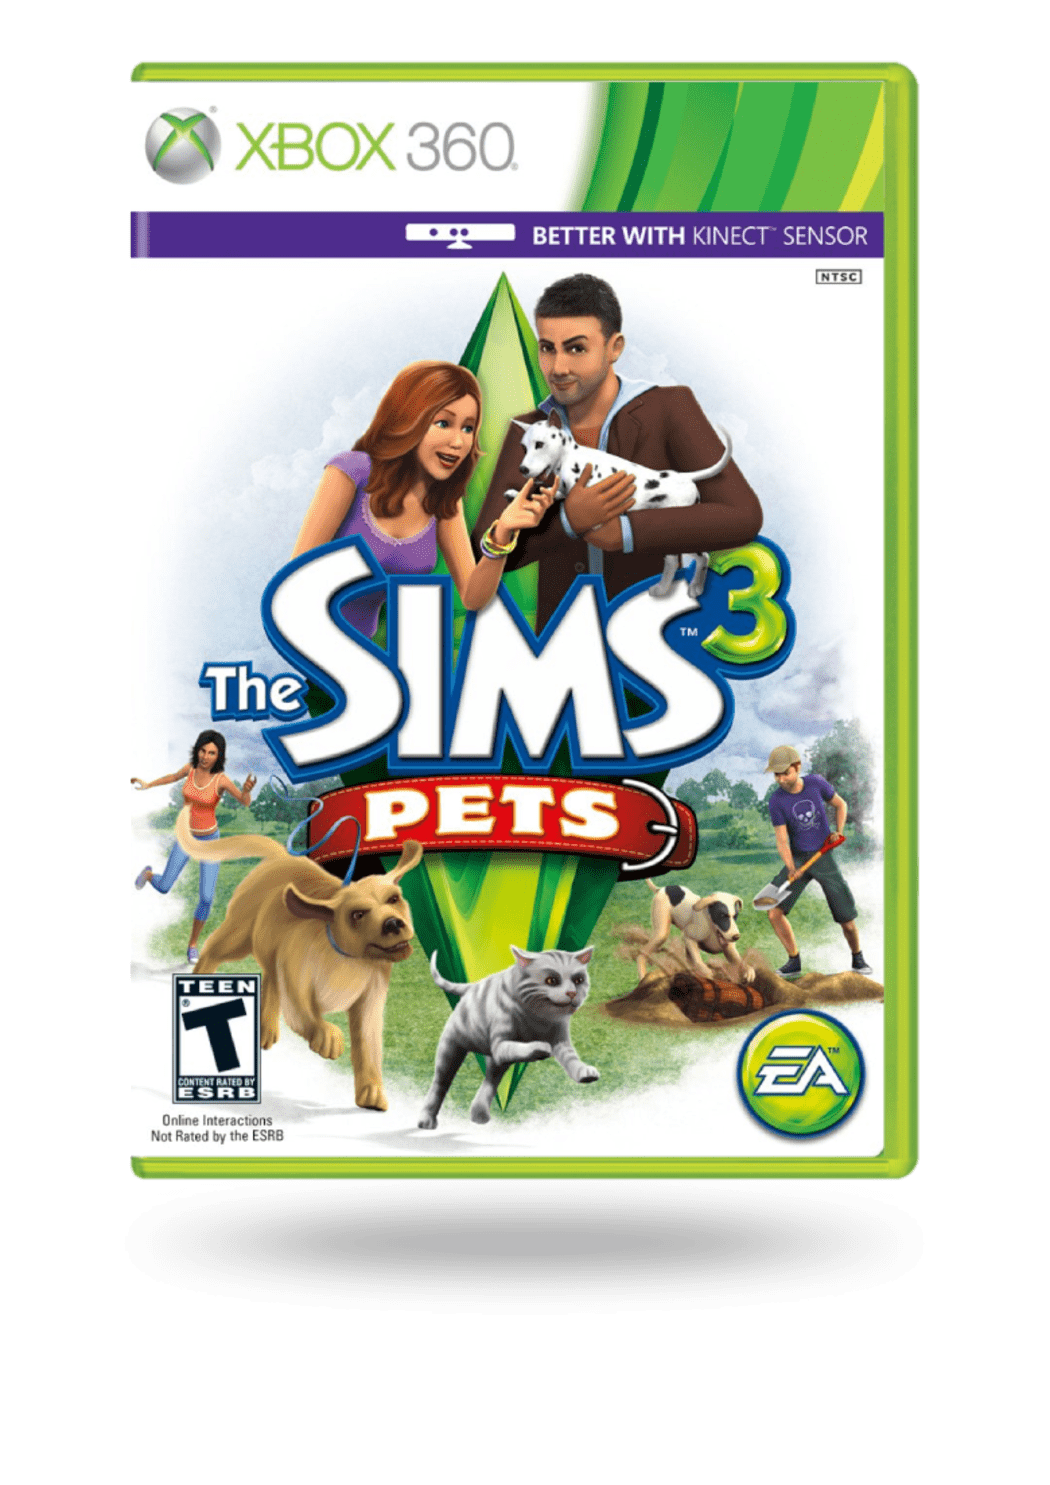 Pet 3 book. The SIMS 3: Pets (Nintendo 3ds). Симс на иксбокс 360. SIMS 3 питомцы для Xbox 360 фото. Игра на Xbox 360 с питомцами.